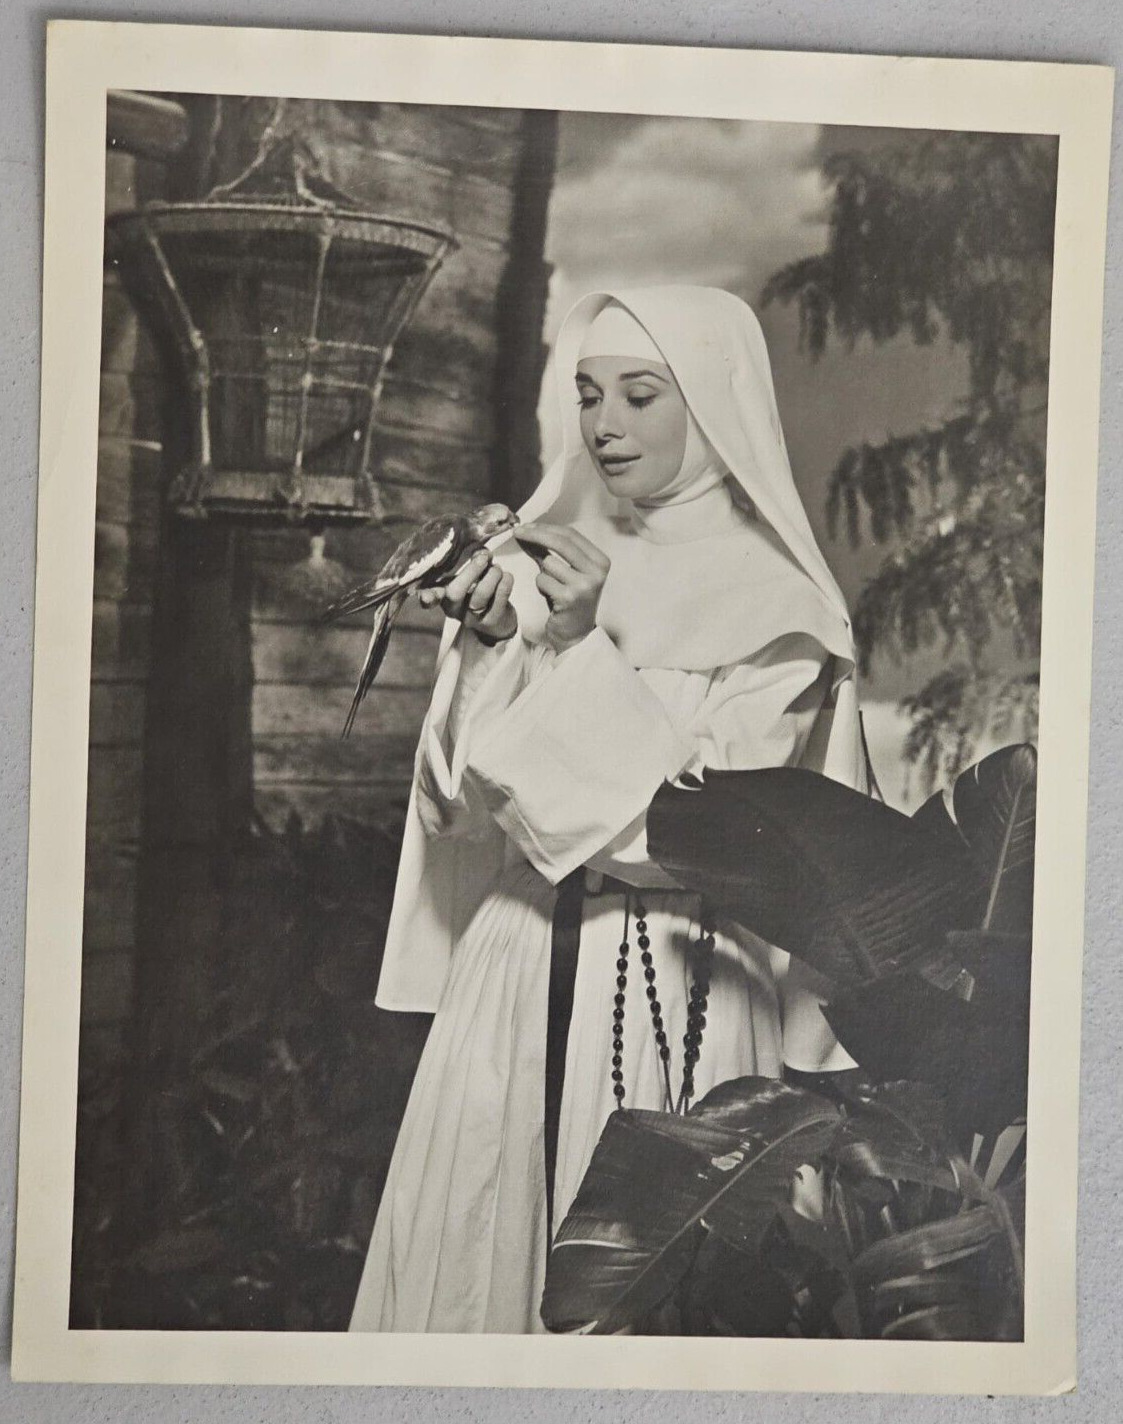 HOLLYWOOD Audrey Hepburn The Nun's Story (1959) PORTRAIT PHOTO Oversize XXL